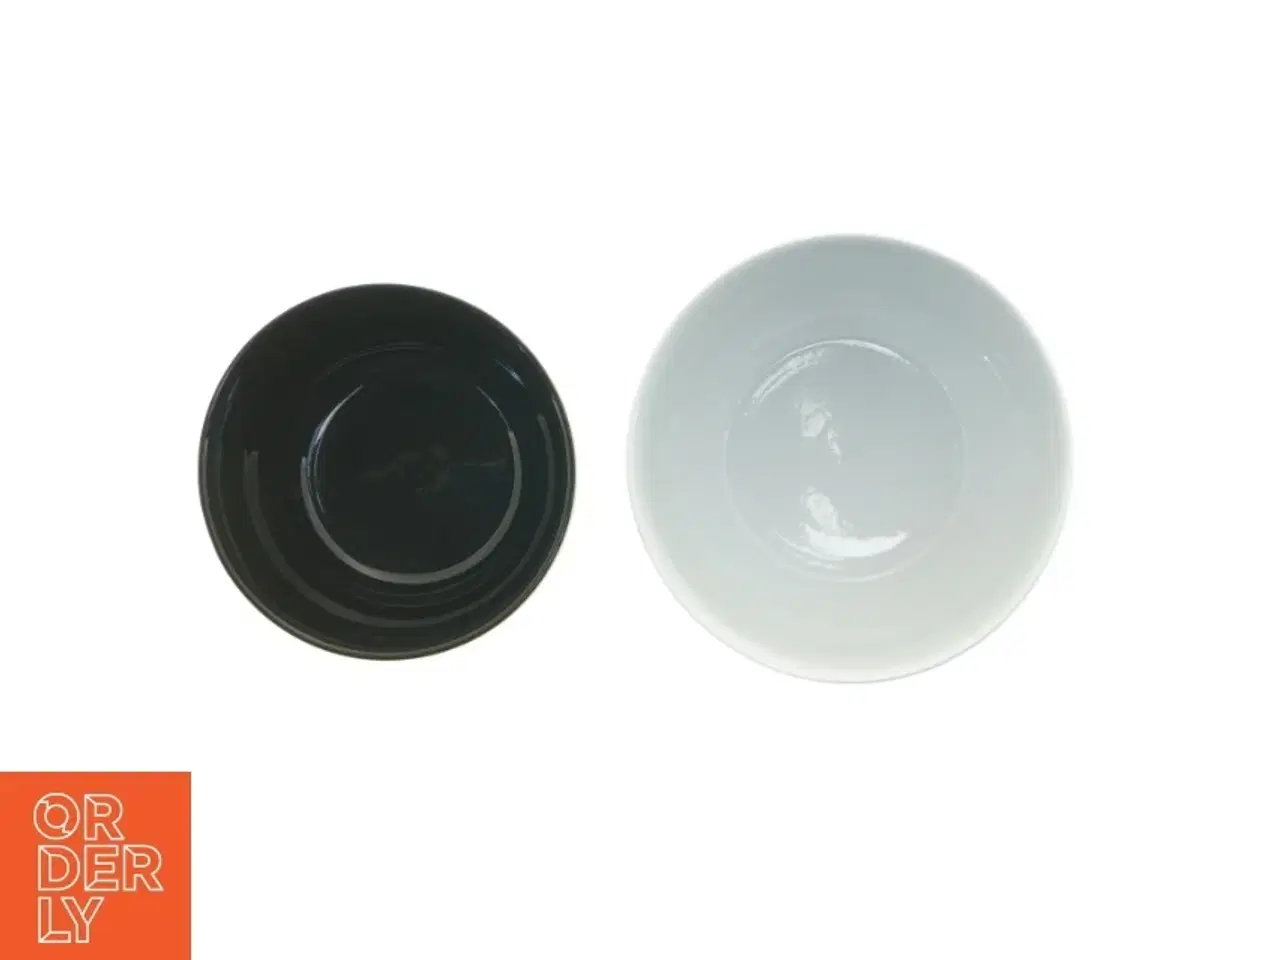 Billede 3 - Sort og hvid keramikskåle og tallerkener fra Piet Hein (str. 18 x 10 cm og 21 x 12 cm)